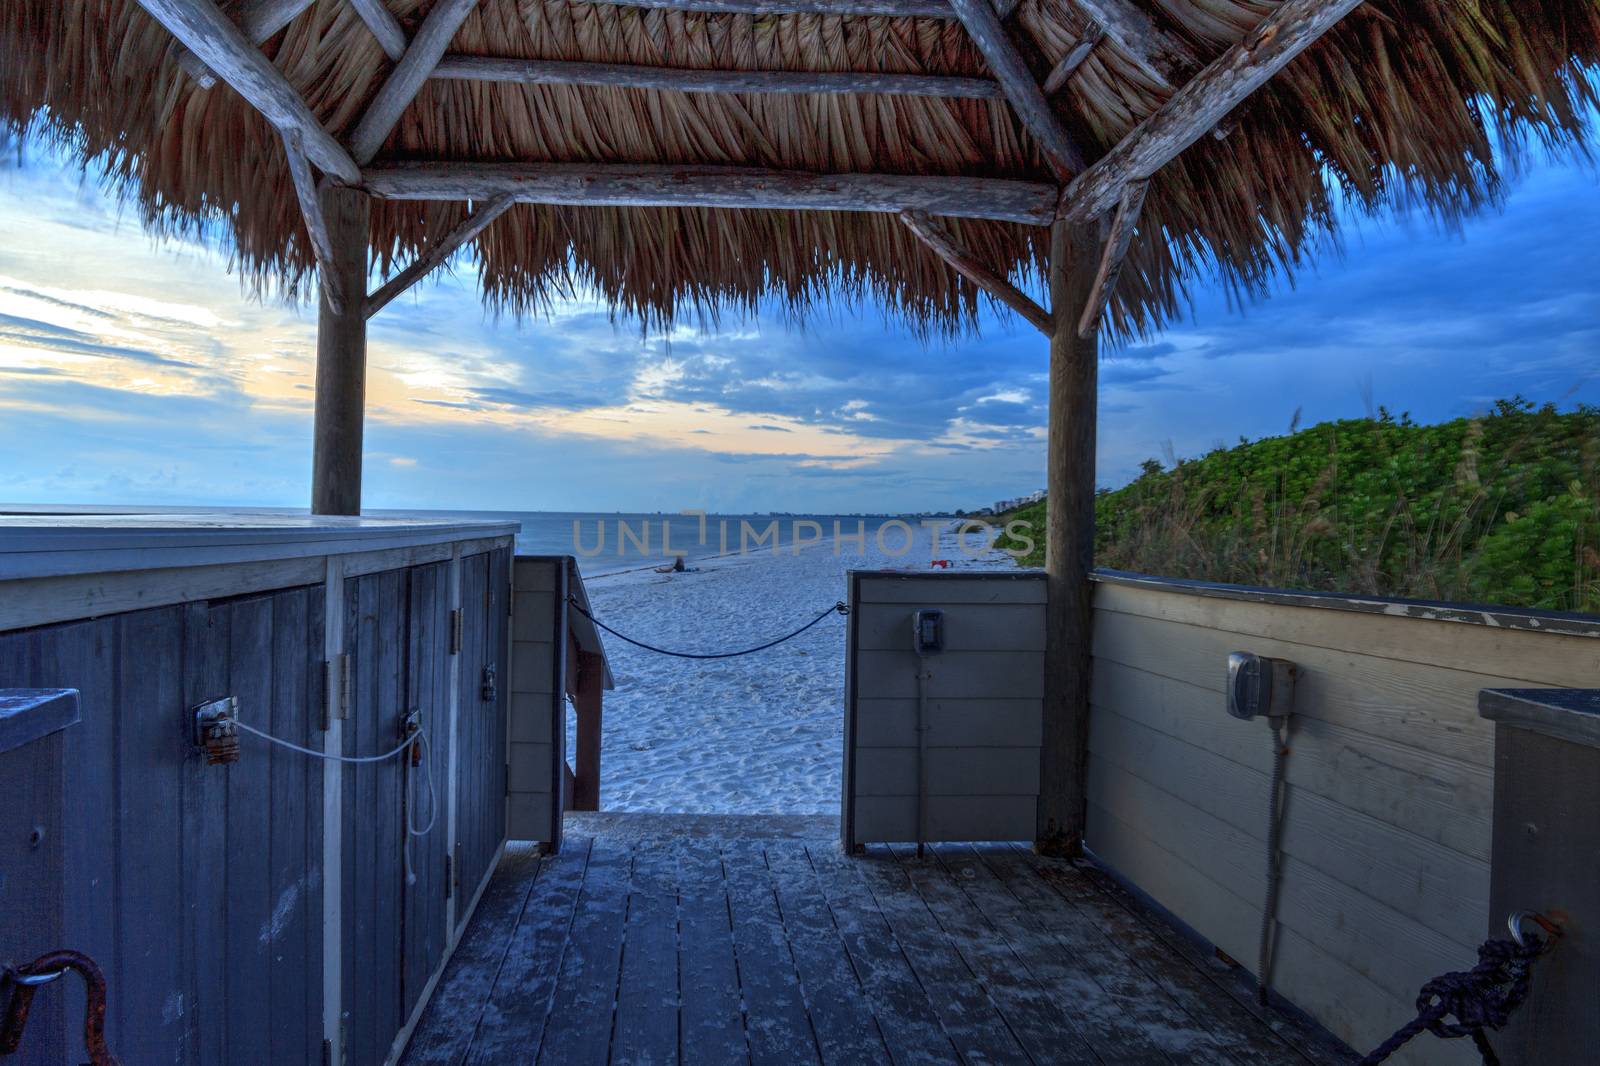 Tiki hut Boardwalk leads down to the white sand of Barefoot Beach in Bonita Springs, Florida